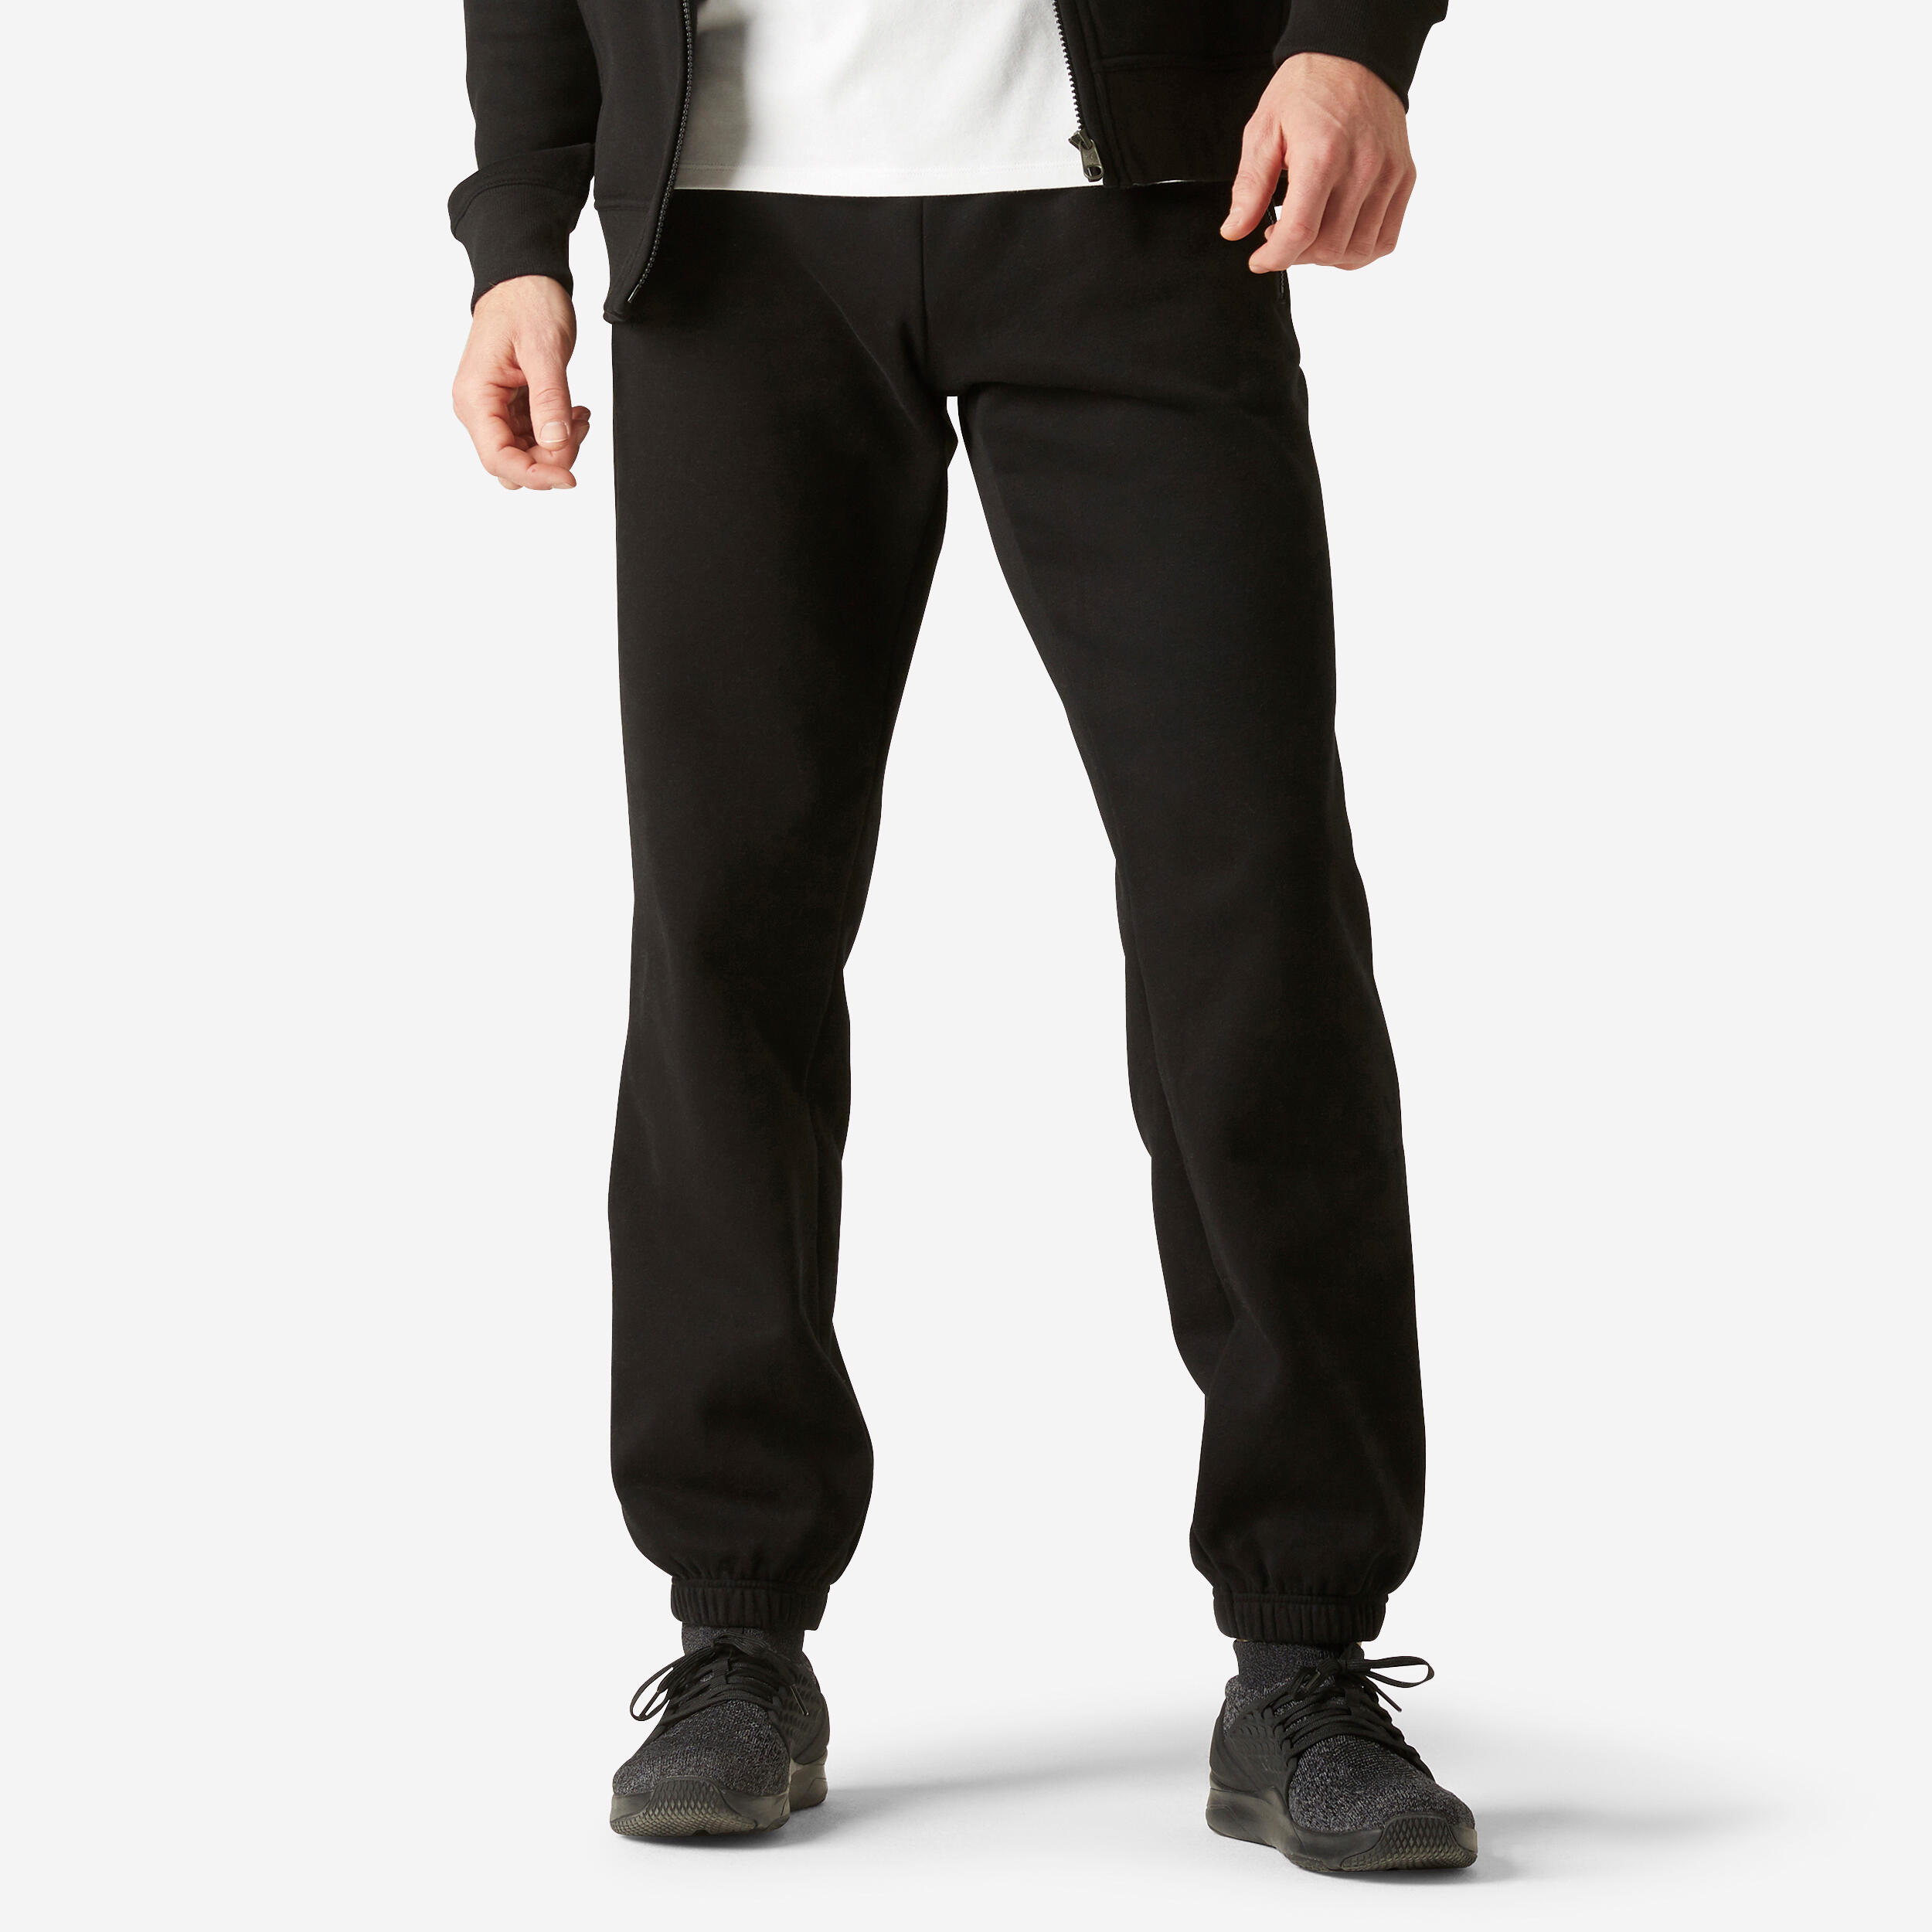 Pantalon de sport homme - 500 noir - DOMYOS